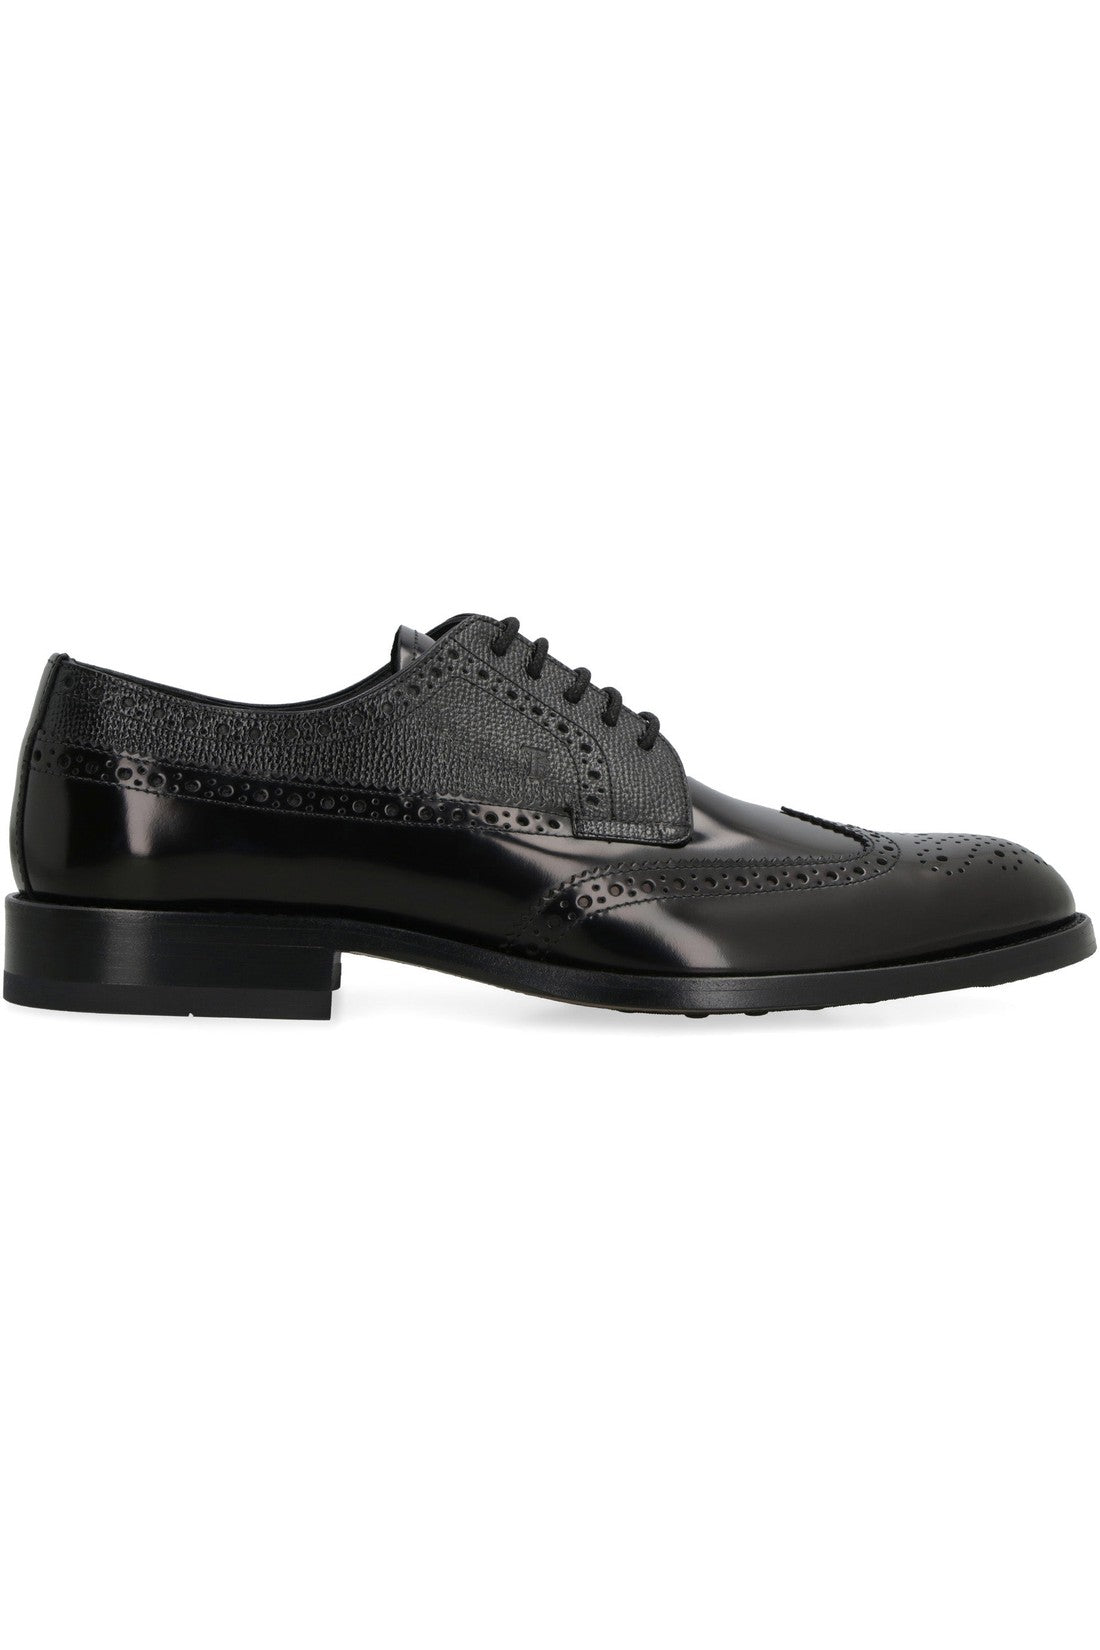 Tod's-OUTLET-SALE-Leather lace-up shoes-ARCHIVIST